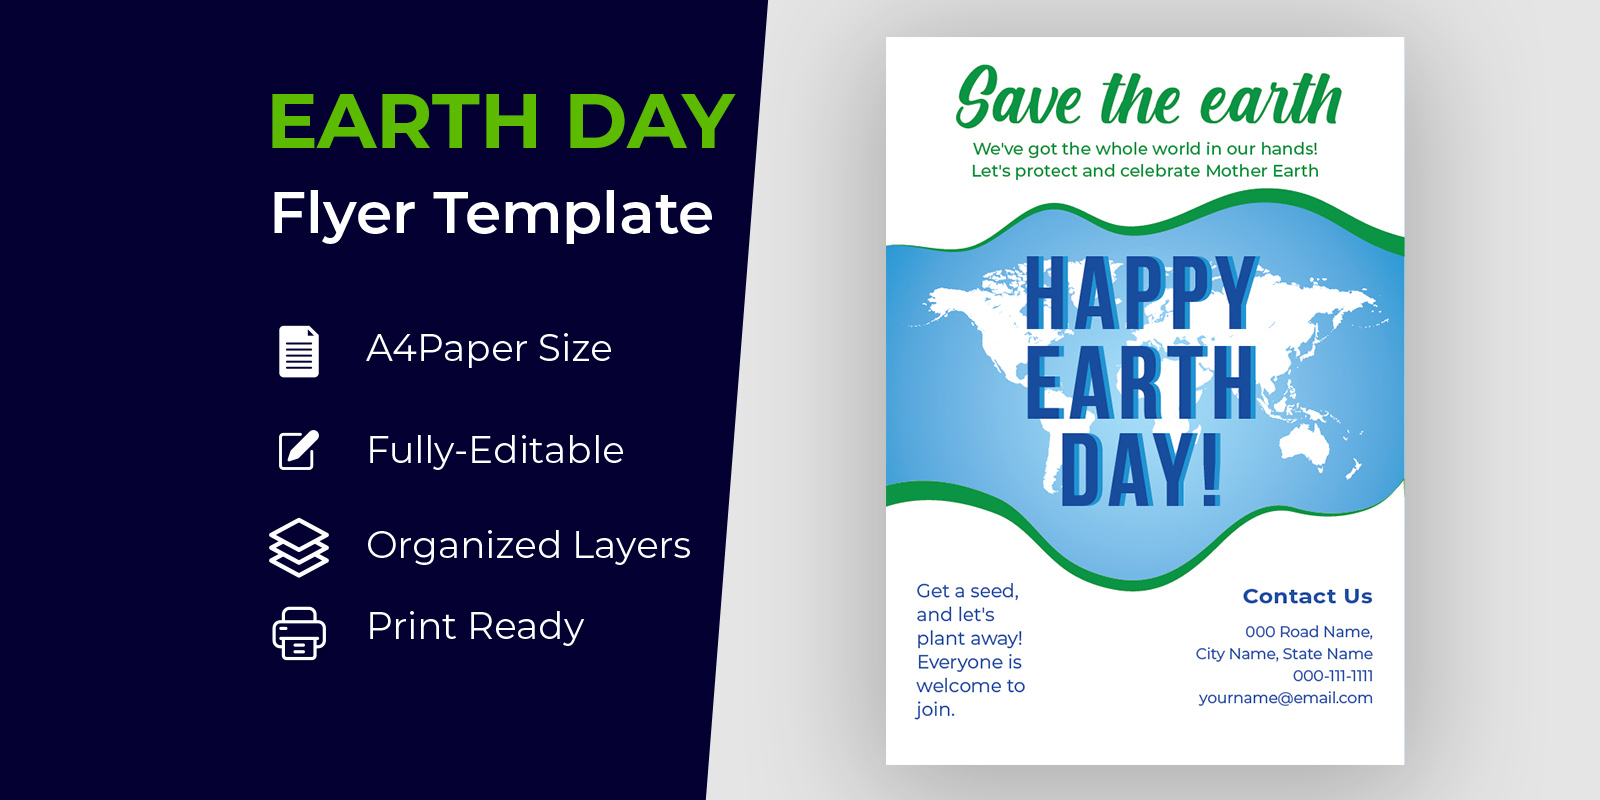 Happy Earth Day Globe Flyer Design Corporate identity template